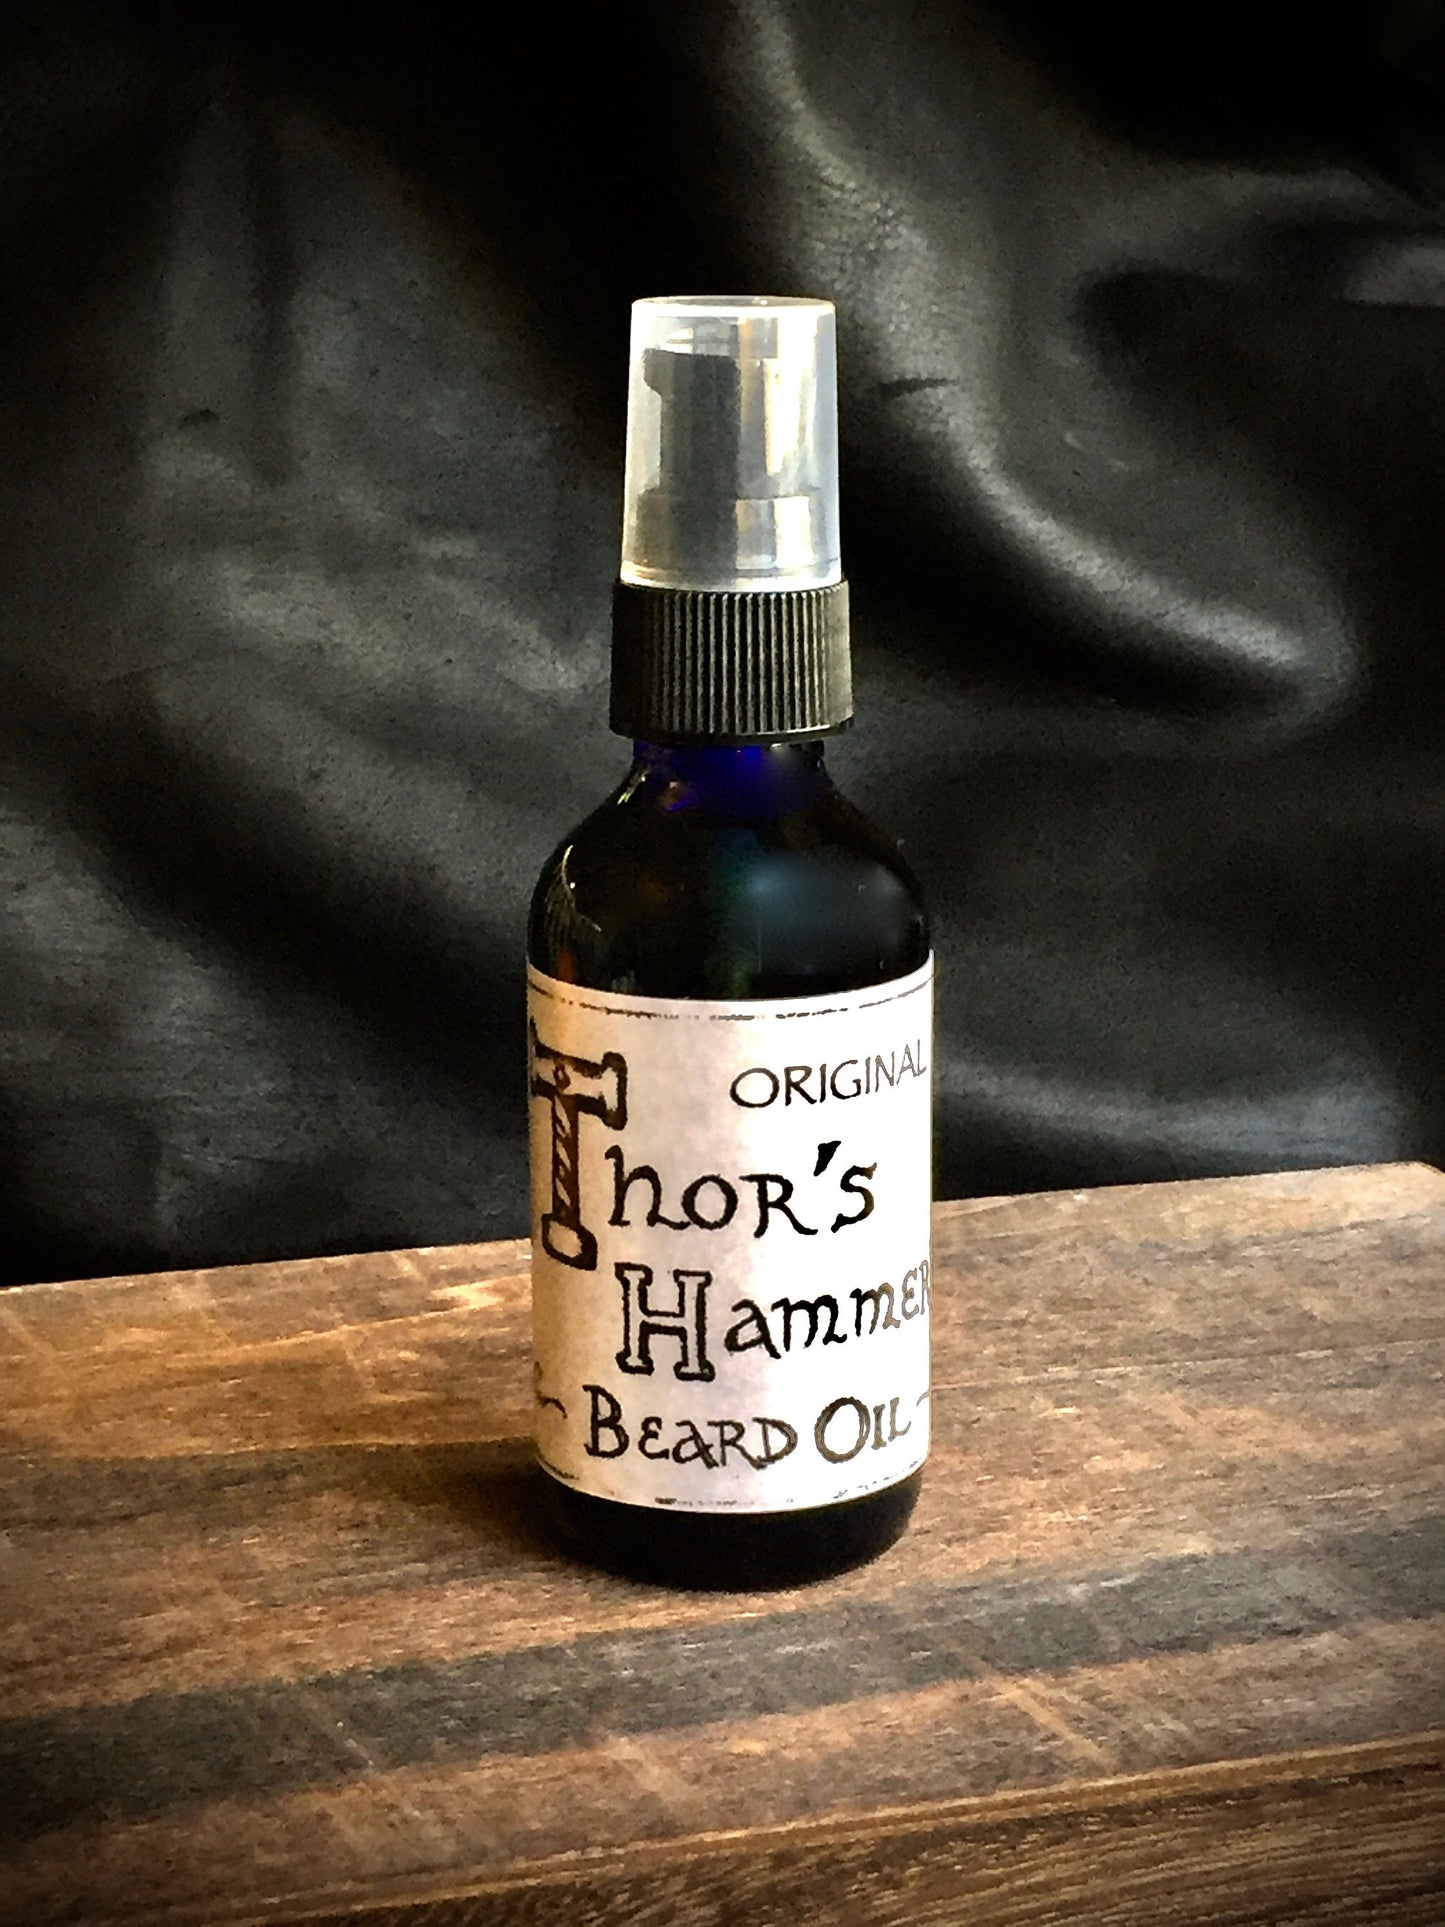 Thor's Hammer Beard Oil | Original Scent | Modern Viking All Natural "Axe" Beard Oil, Fresh, Smooth, Sweet, Spicy, Resinous